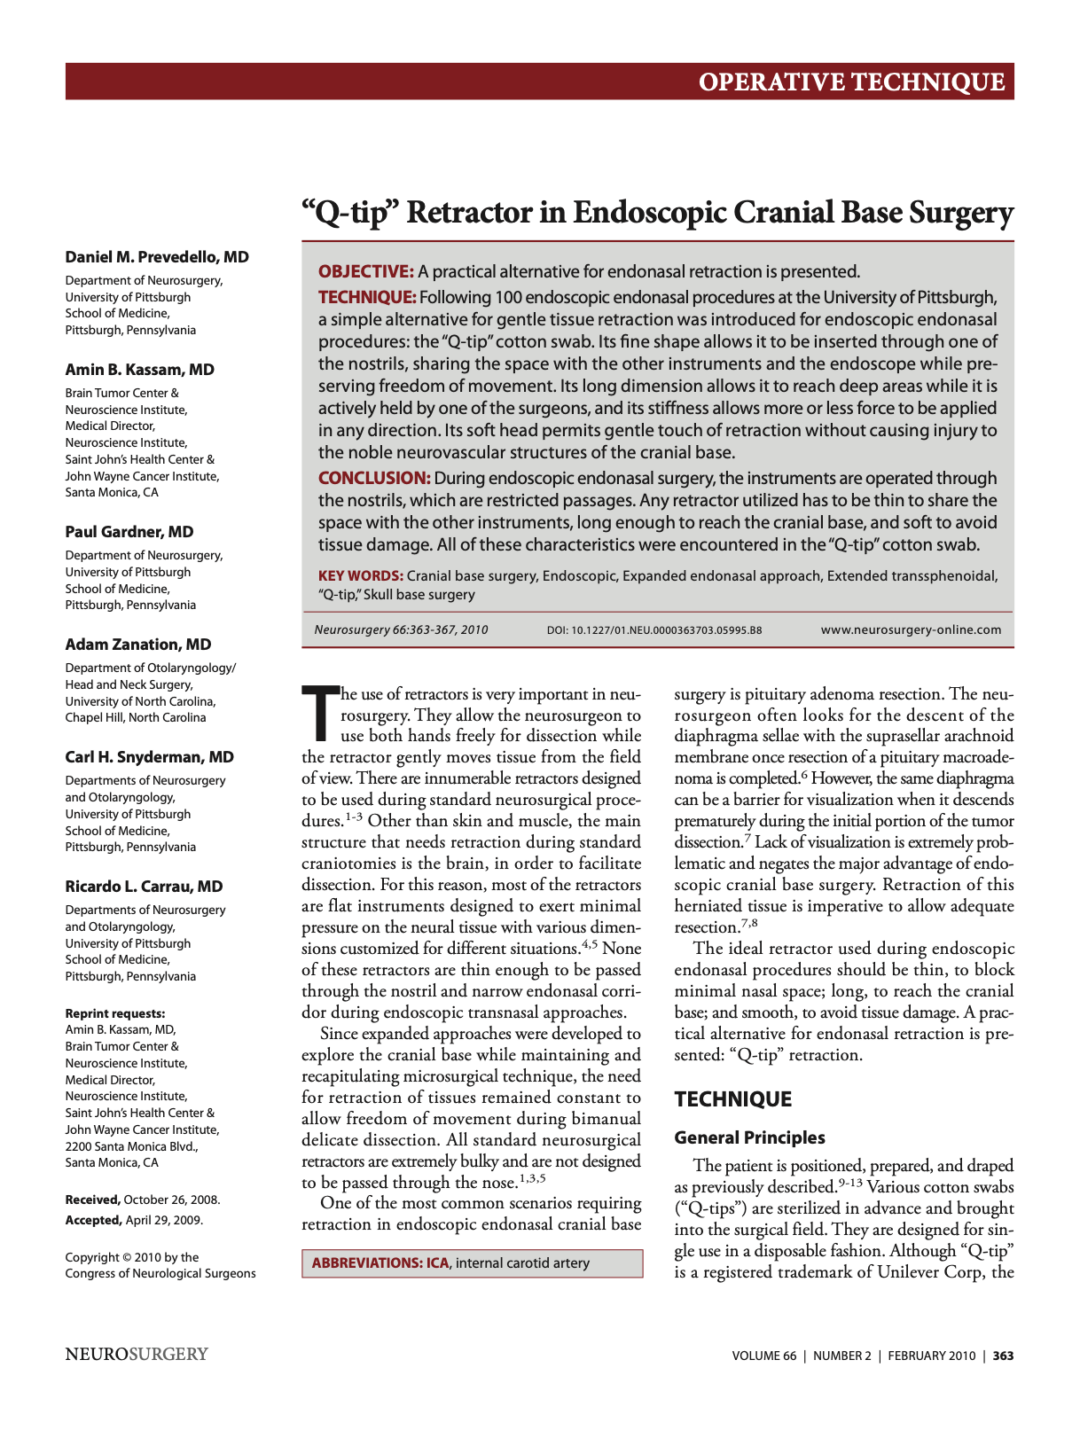 “Q-tip” Retractor in Endoscopic Cranial Base Surgery